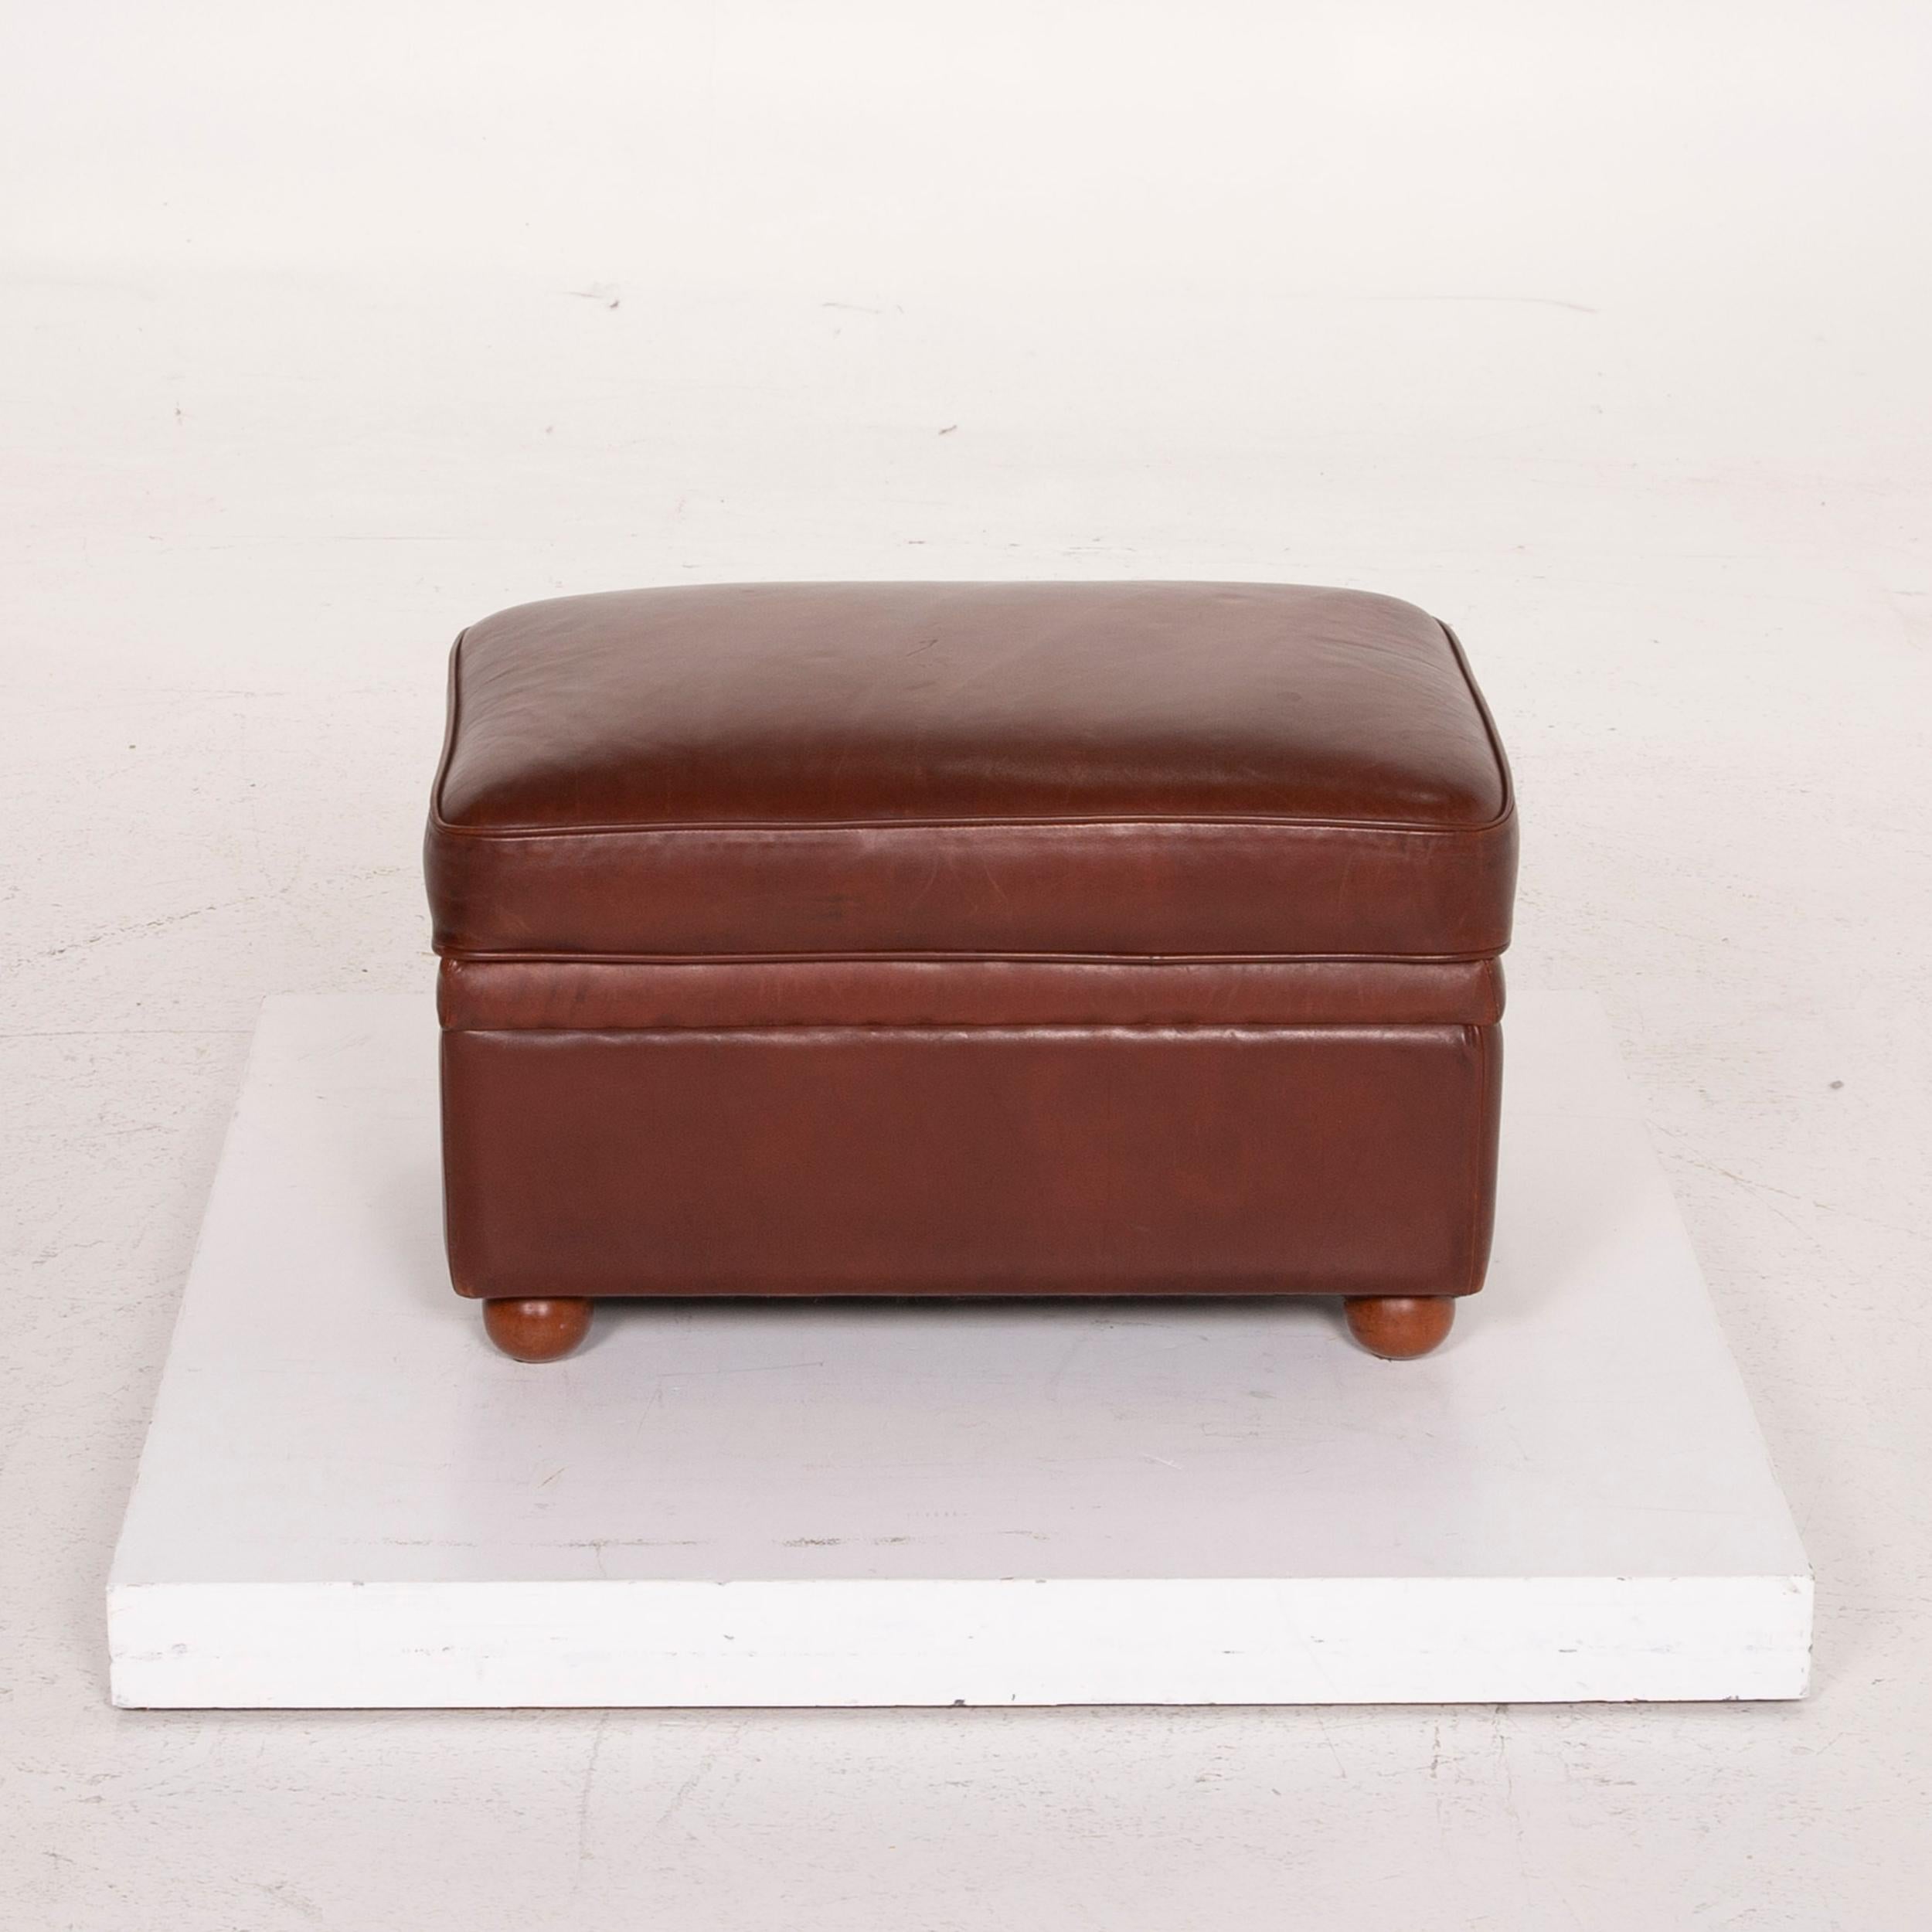 Poltrona Frau Leather Sofa Set Cognac Two-Seat Stool For Sale 6